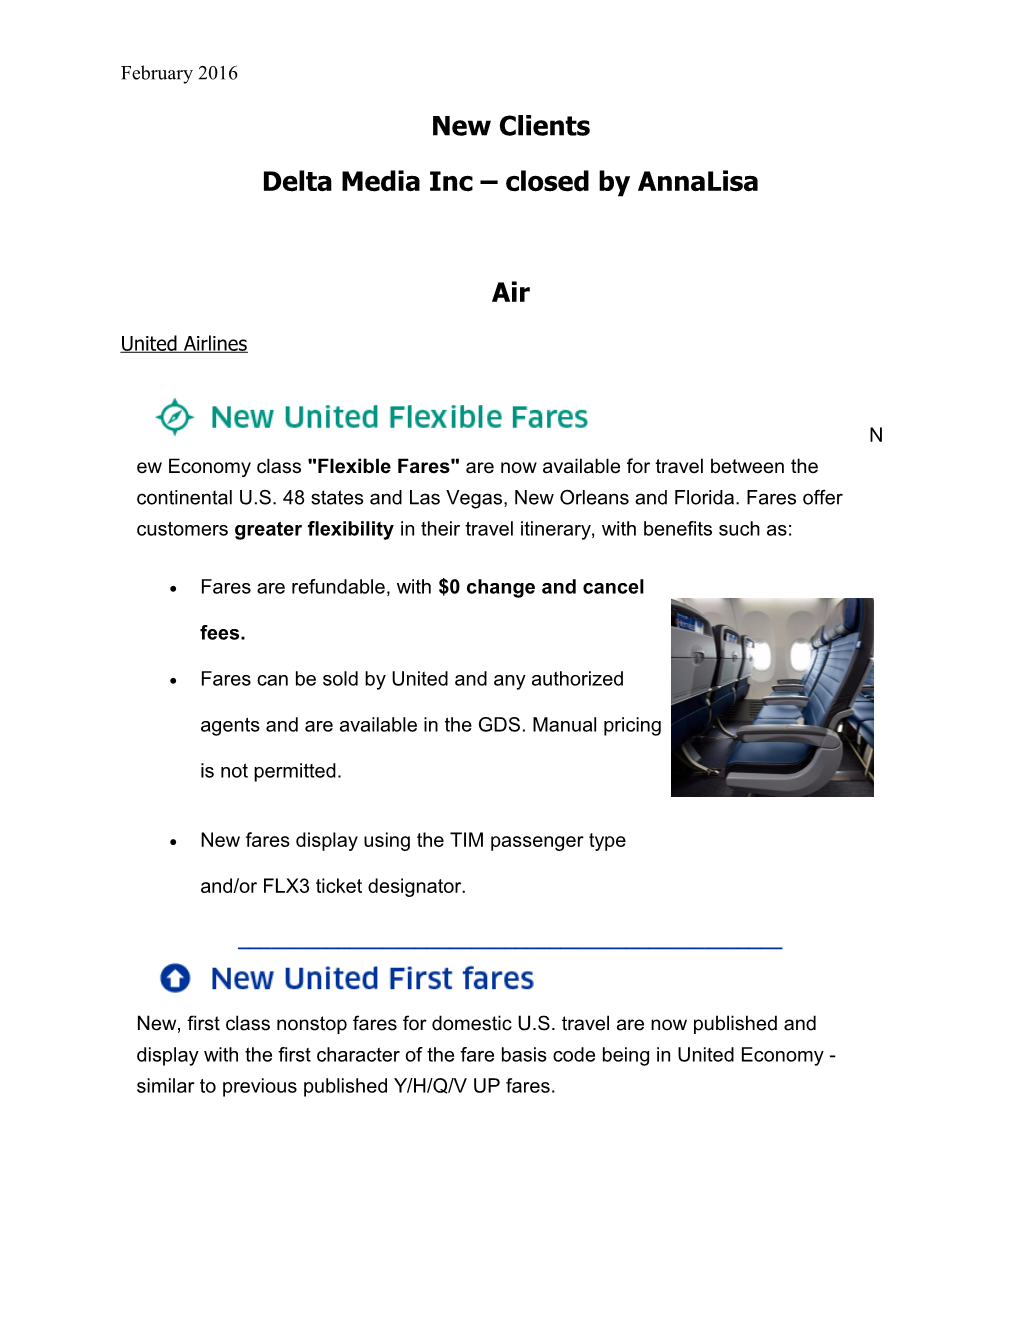 Delta Media Inc Closed by Annalisa